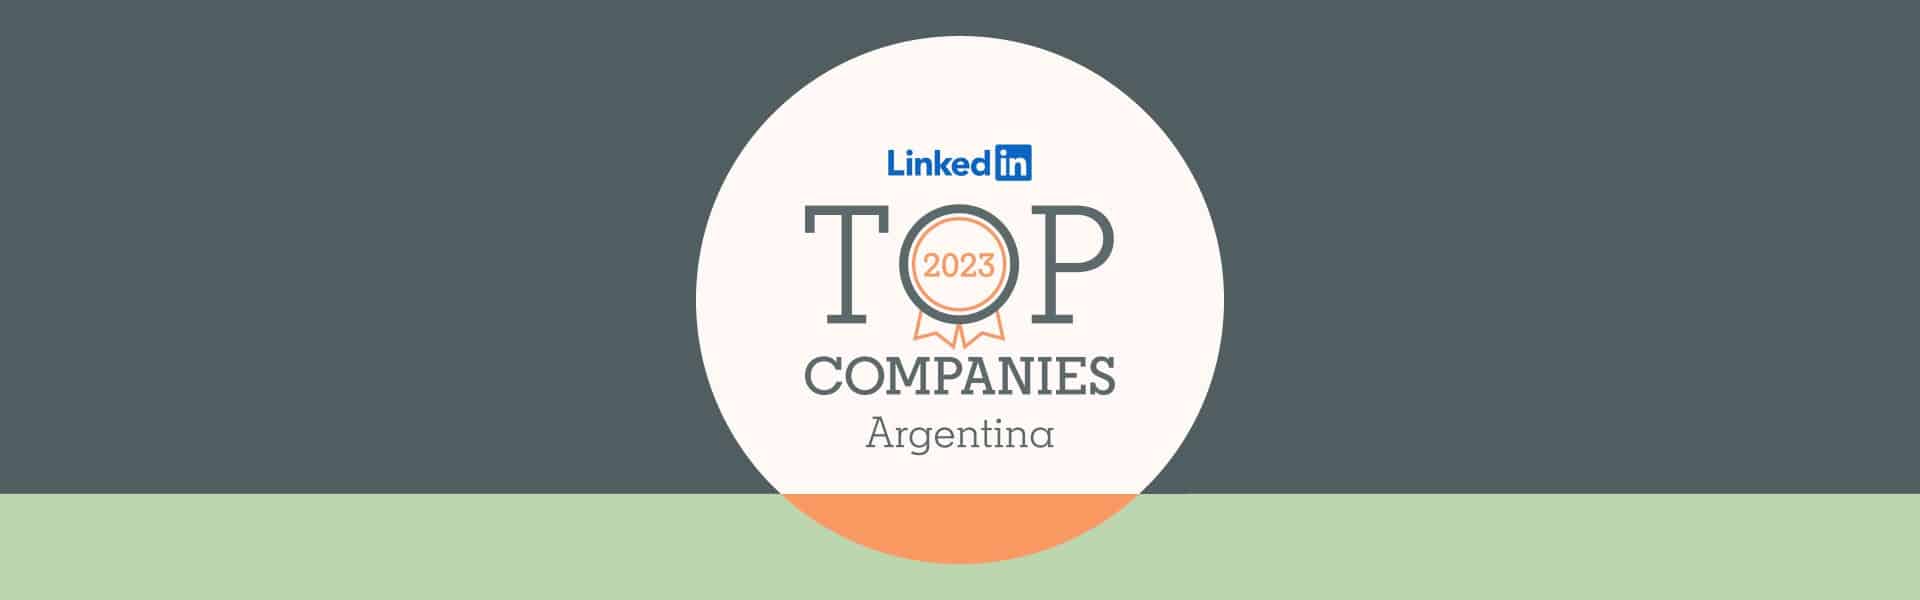 SAP Argentina fue incluida en la lista LinkedIn Top Companies 2023